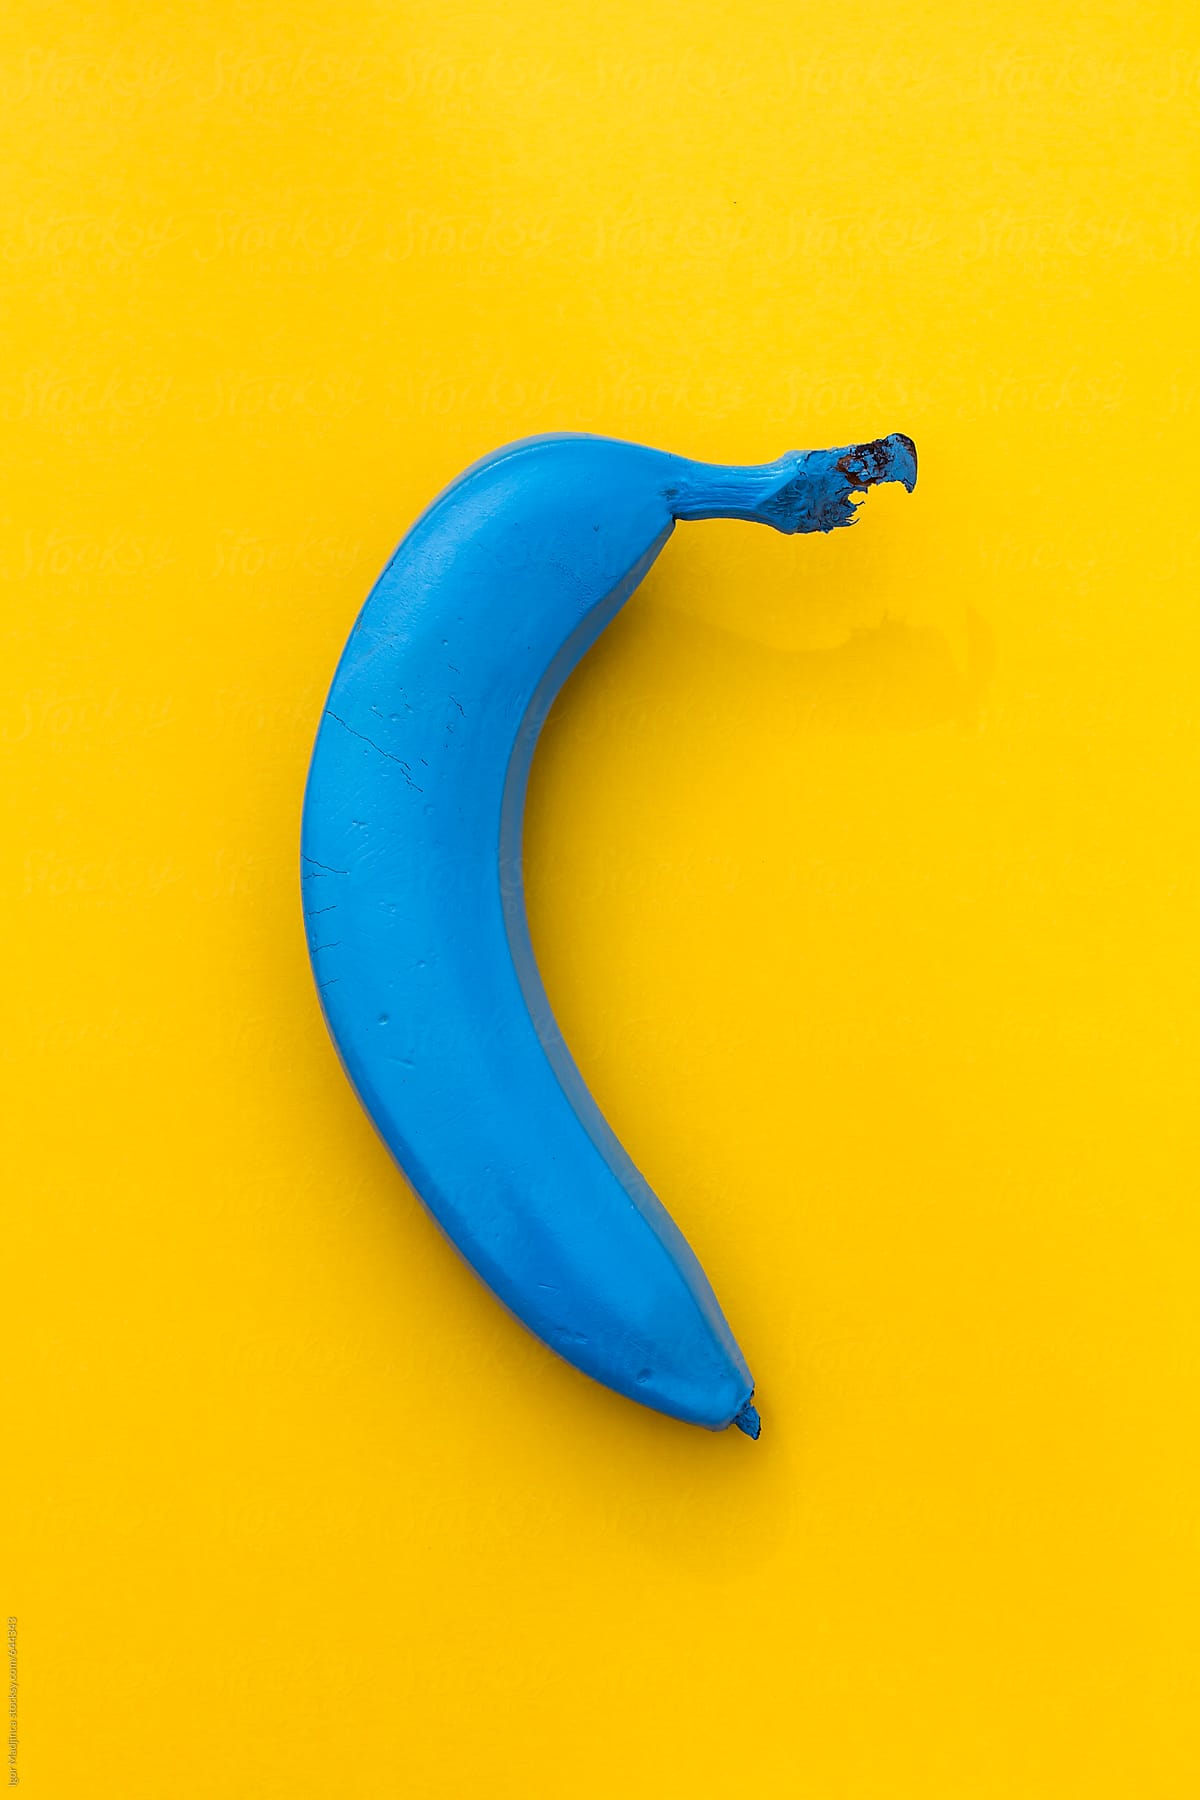 Blue Banana On A Yellow Background, The Contrast by Stocksy Contributor Igor  Madjinca - Stocksy